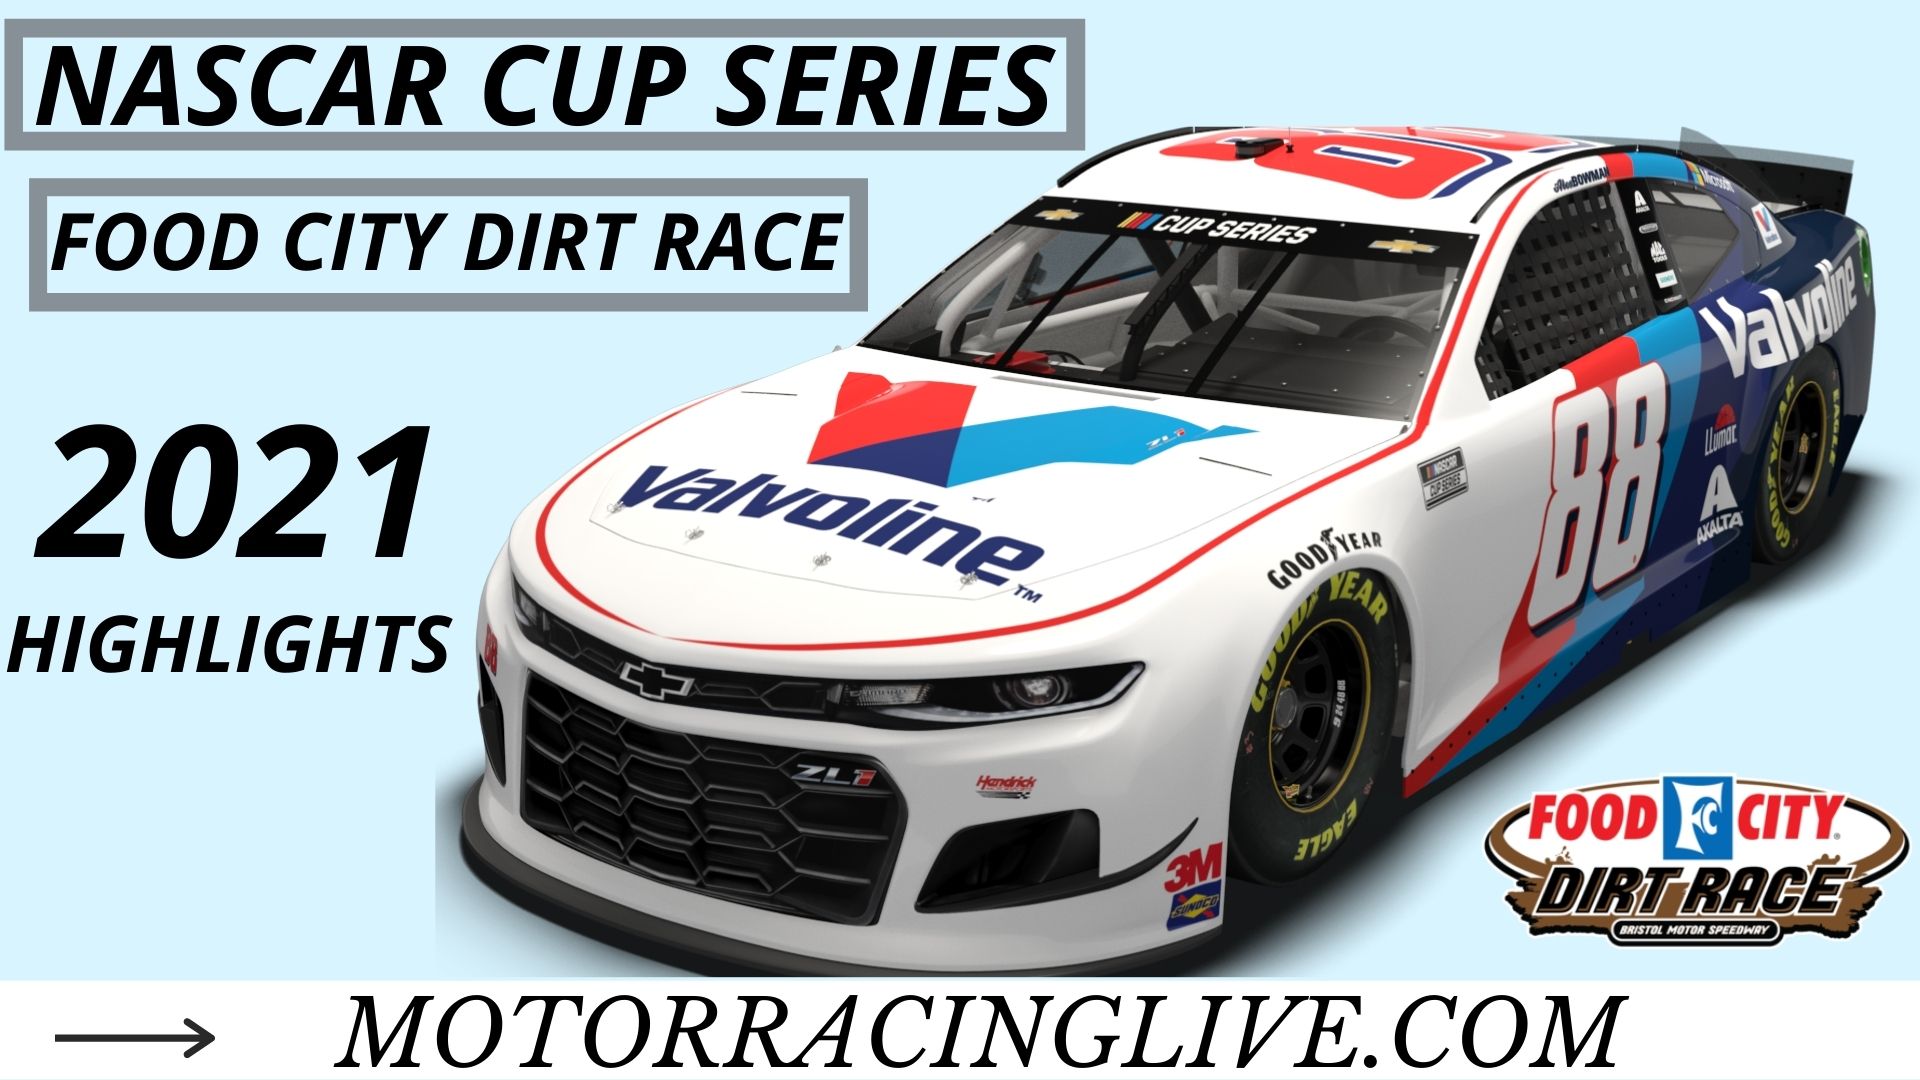 Food City Dirt Race Highlights 2021 NASCAR Cup Series